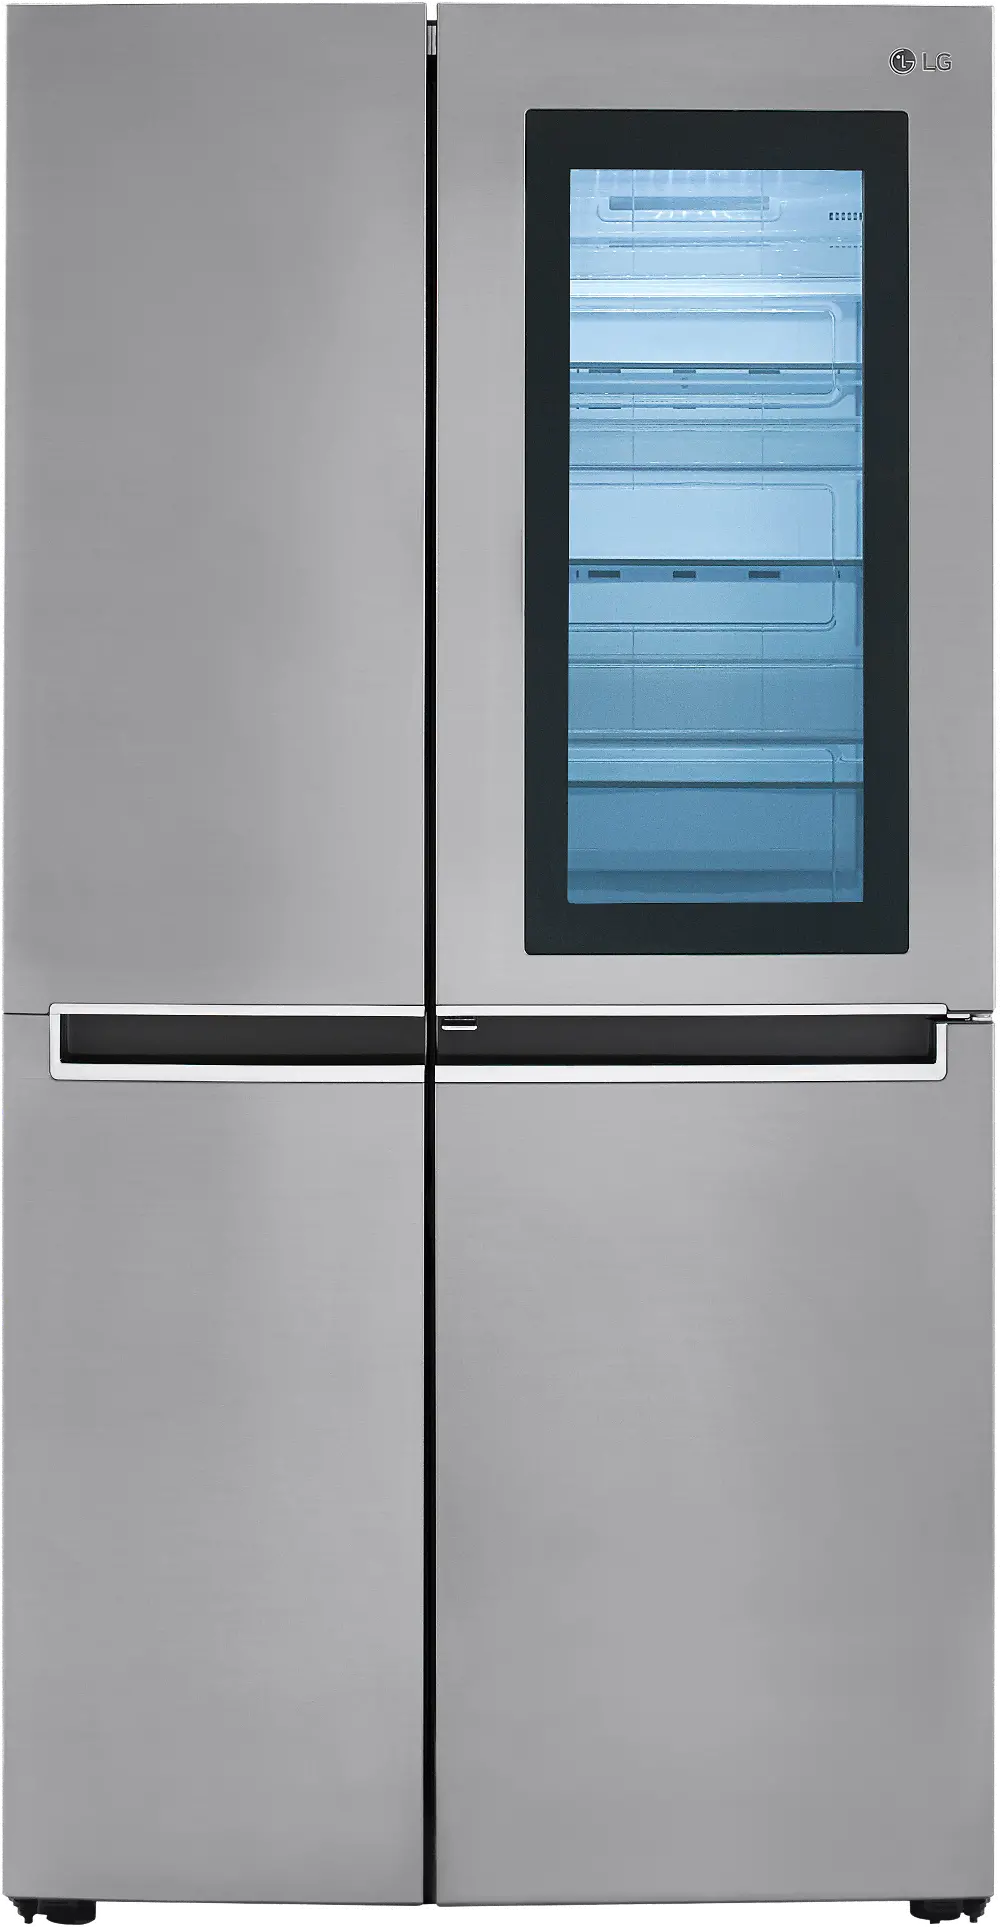 LRSES2706V LG 26.8 cu ft Side by Side Refrigerator - Stainless Steel-1